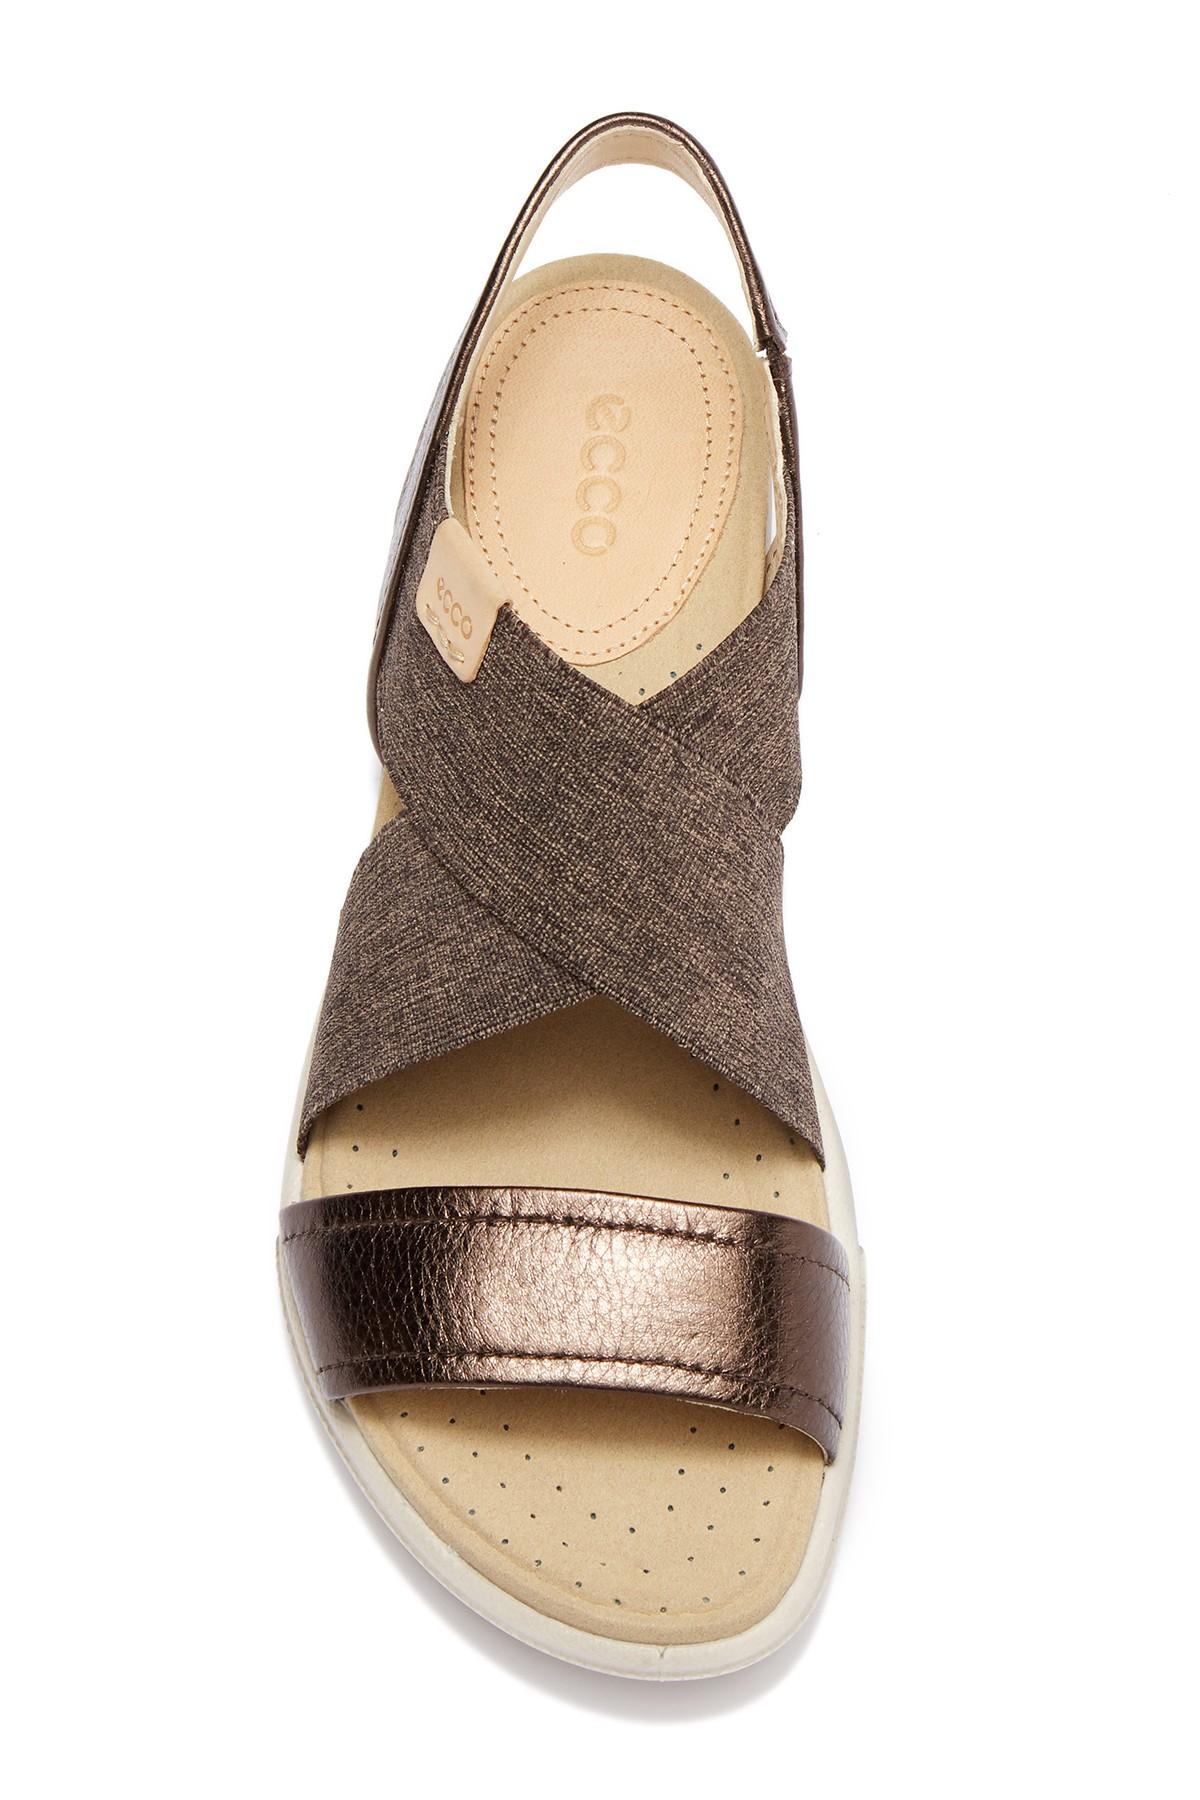 Ecco Leather Damara Cross-strap Sandal in Brown - Lyst